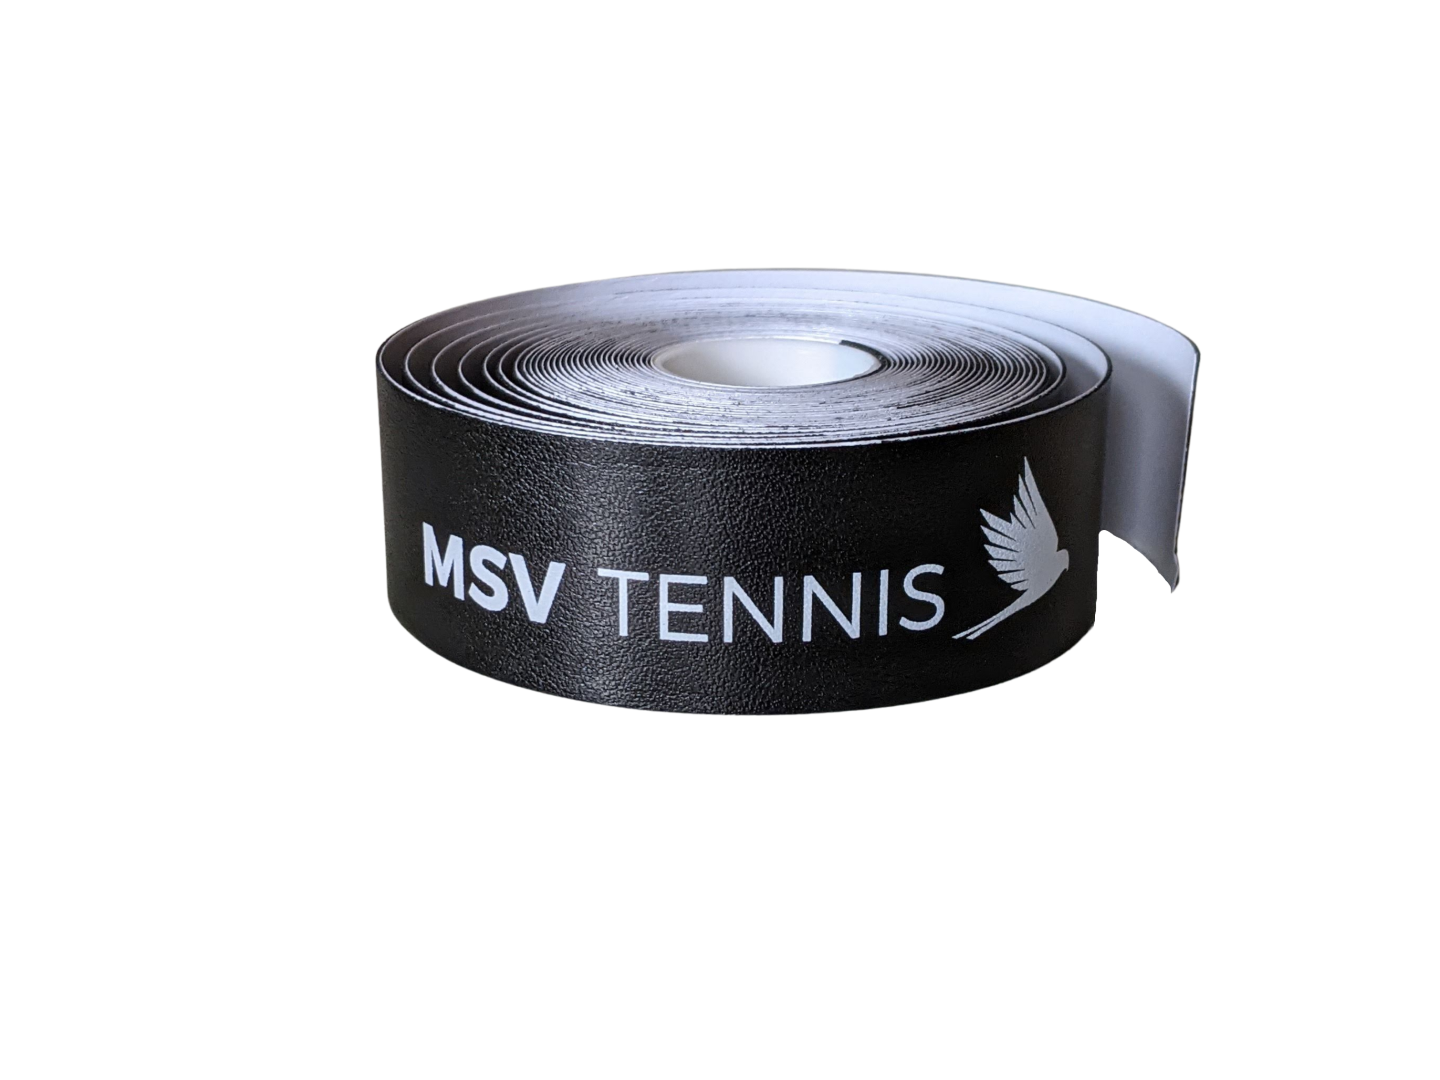 MSV Frame Protection Tape, 3 cm x 4,55 m, black, with MSV branding